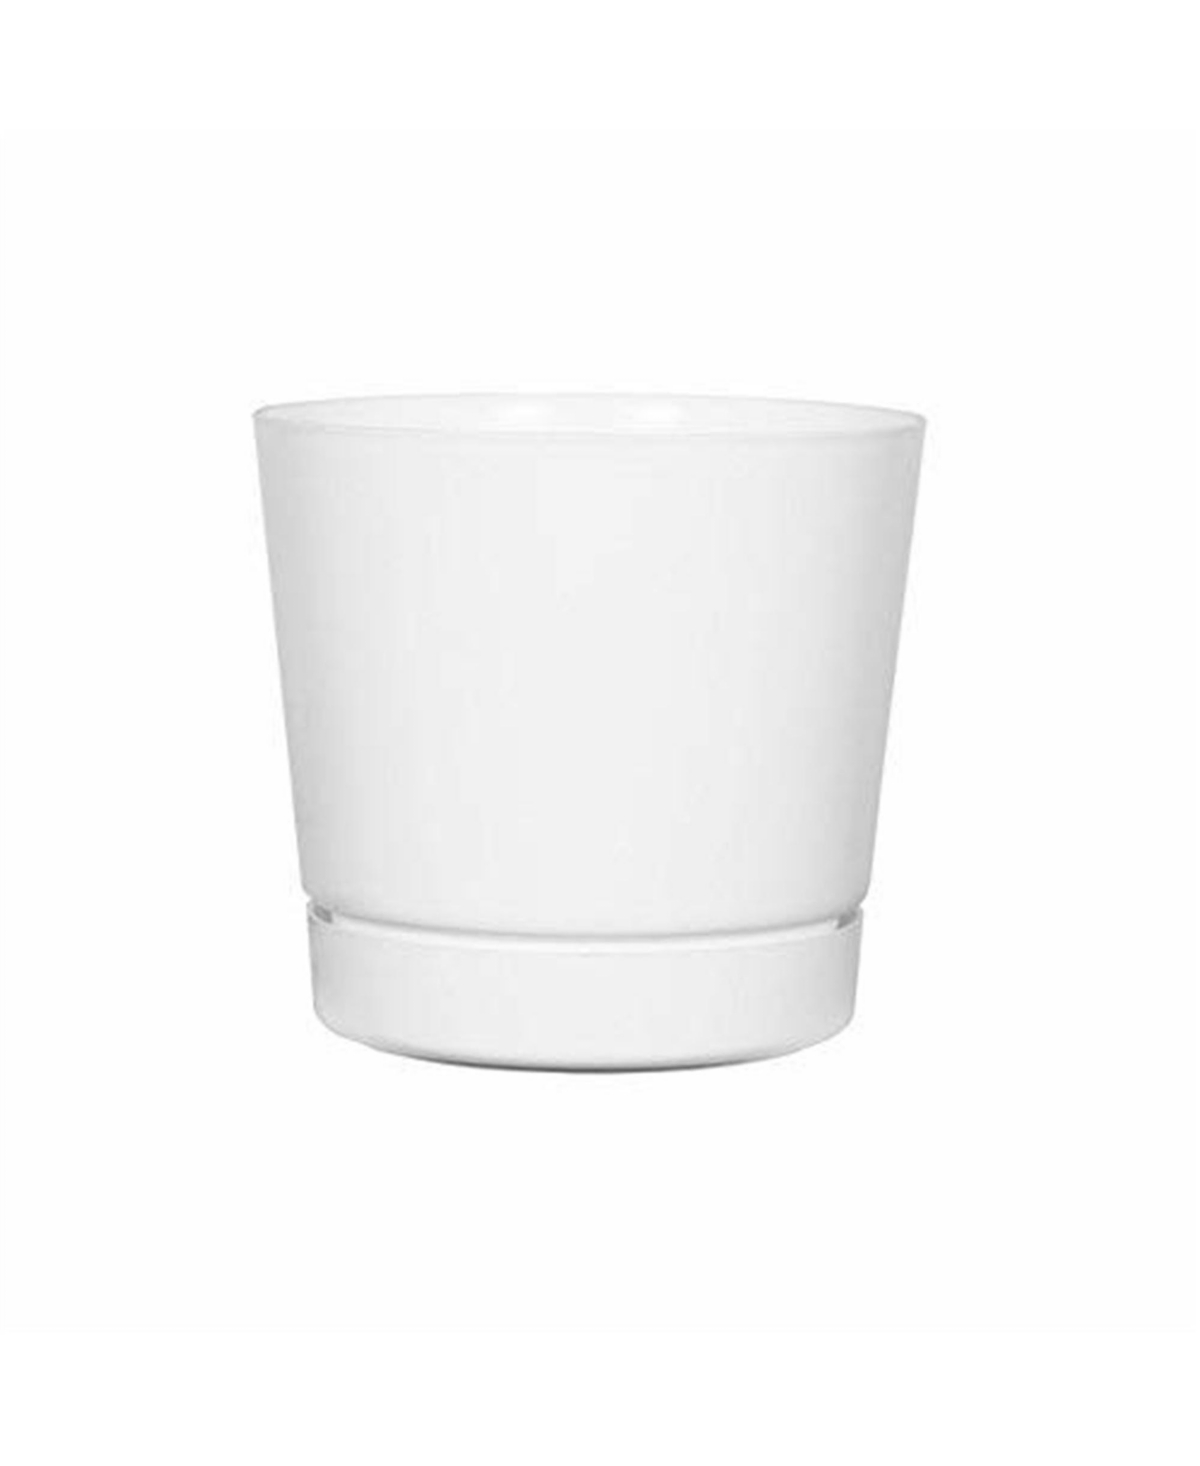 (#10062) Full Depth Round Cylinder Pot, White, 6 Inch - White